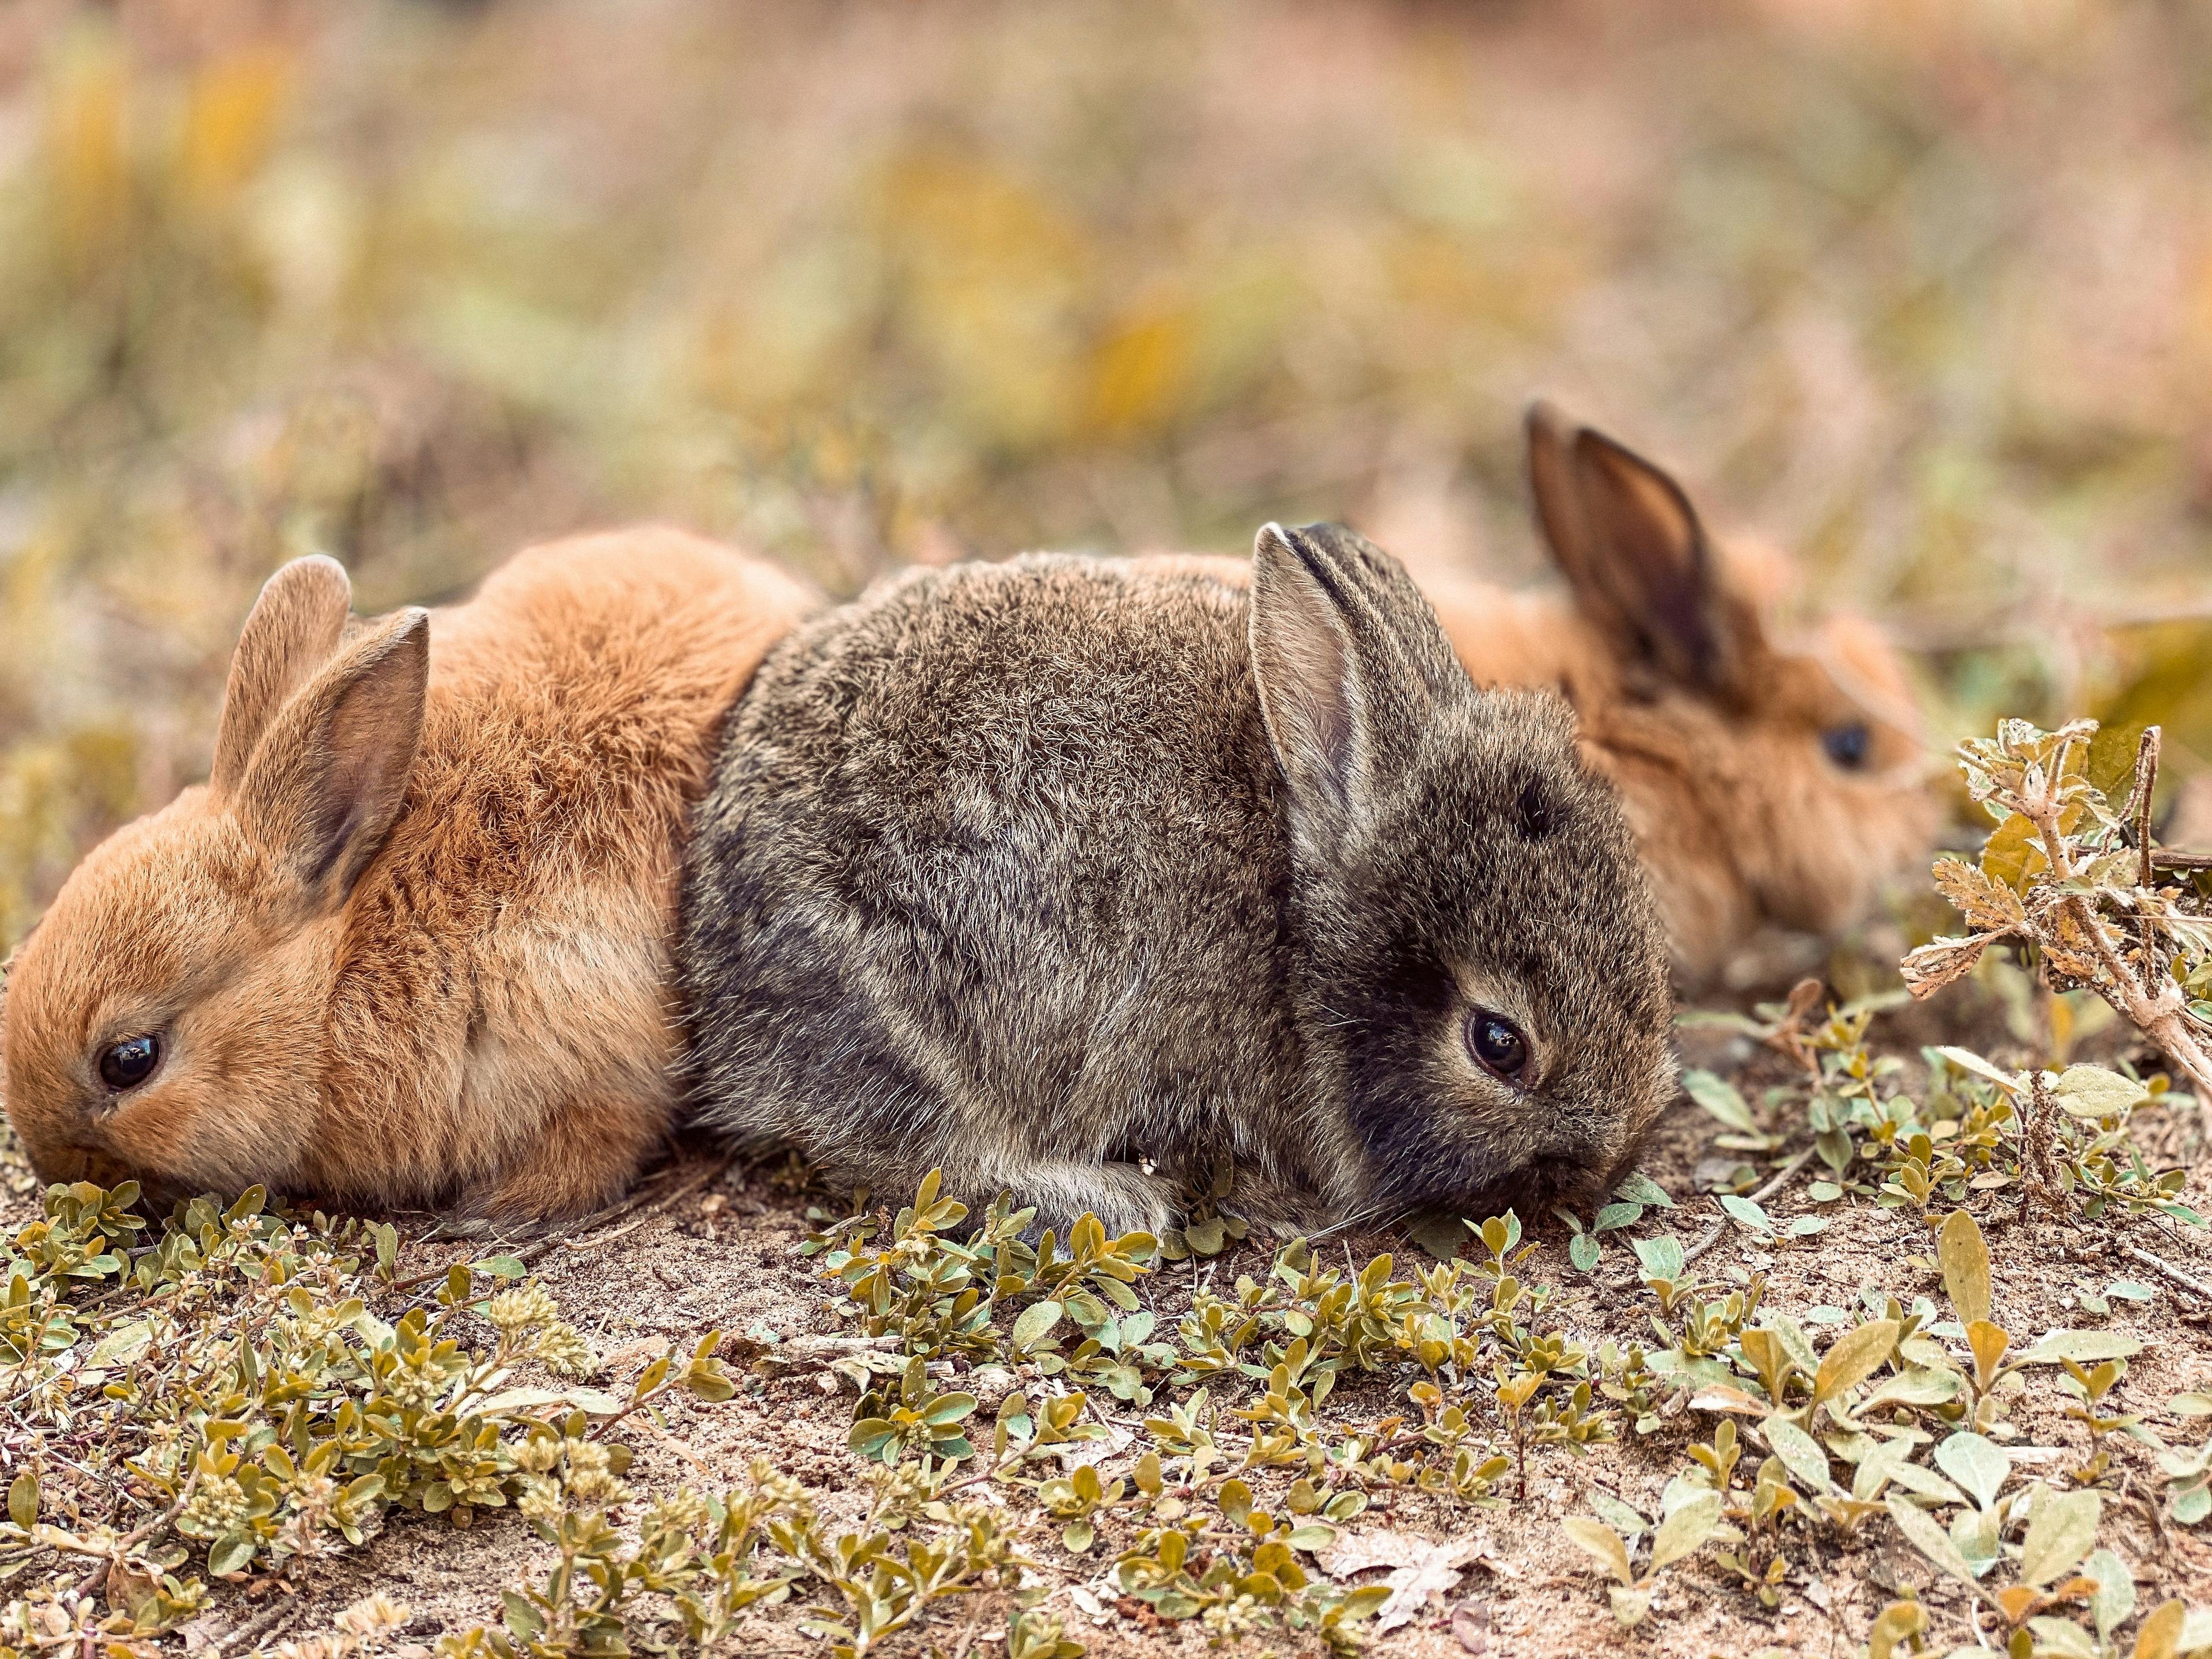 Photo of rabbits